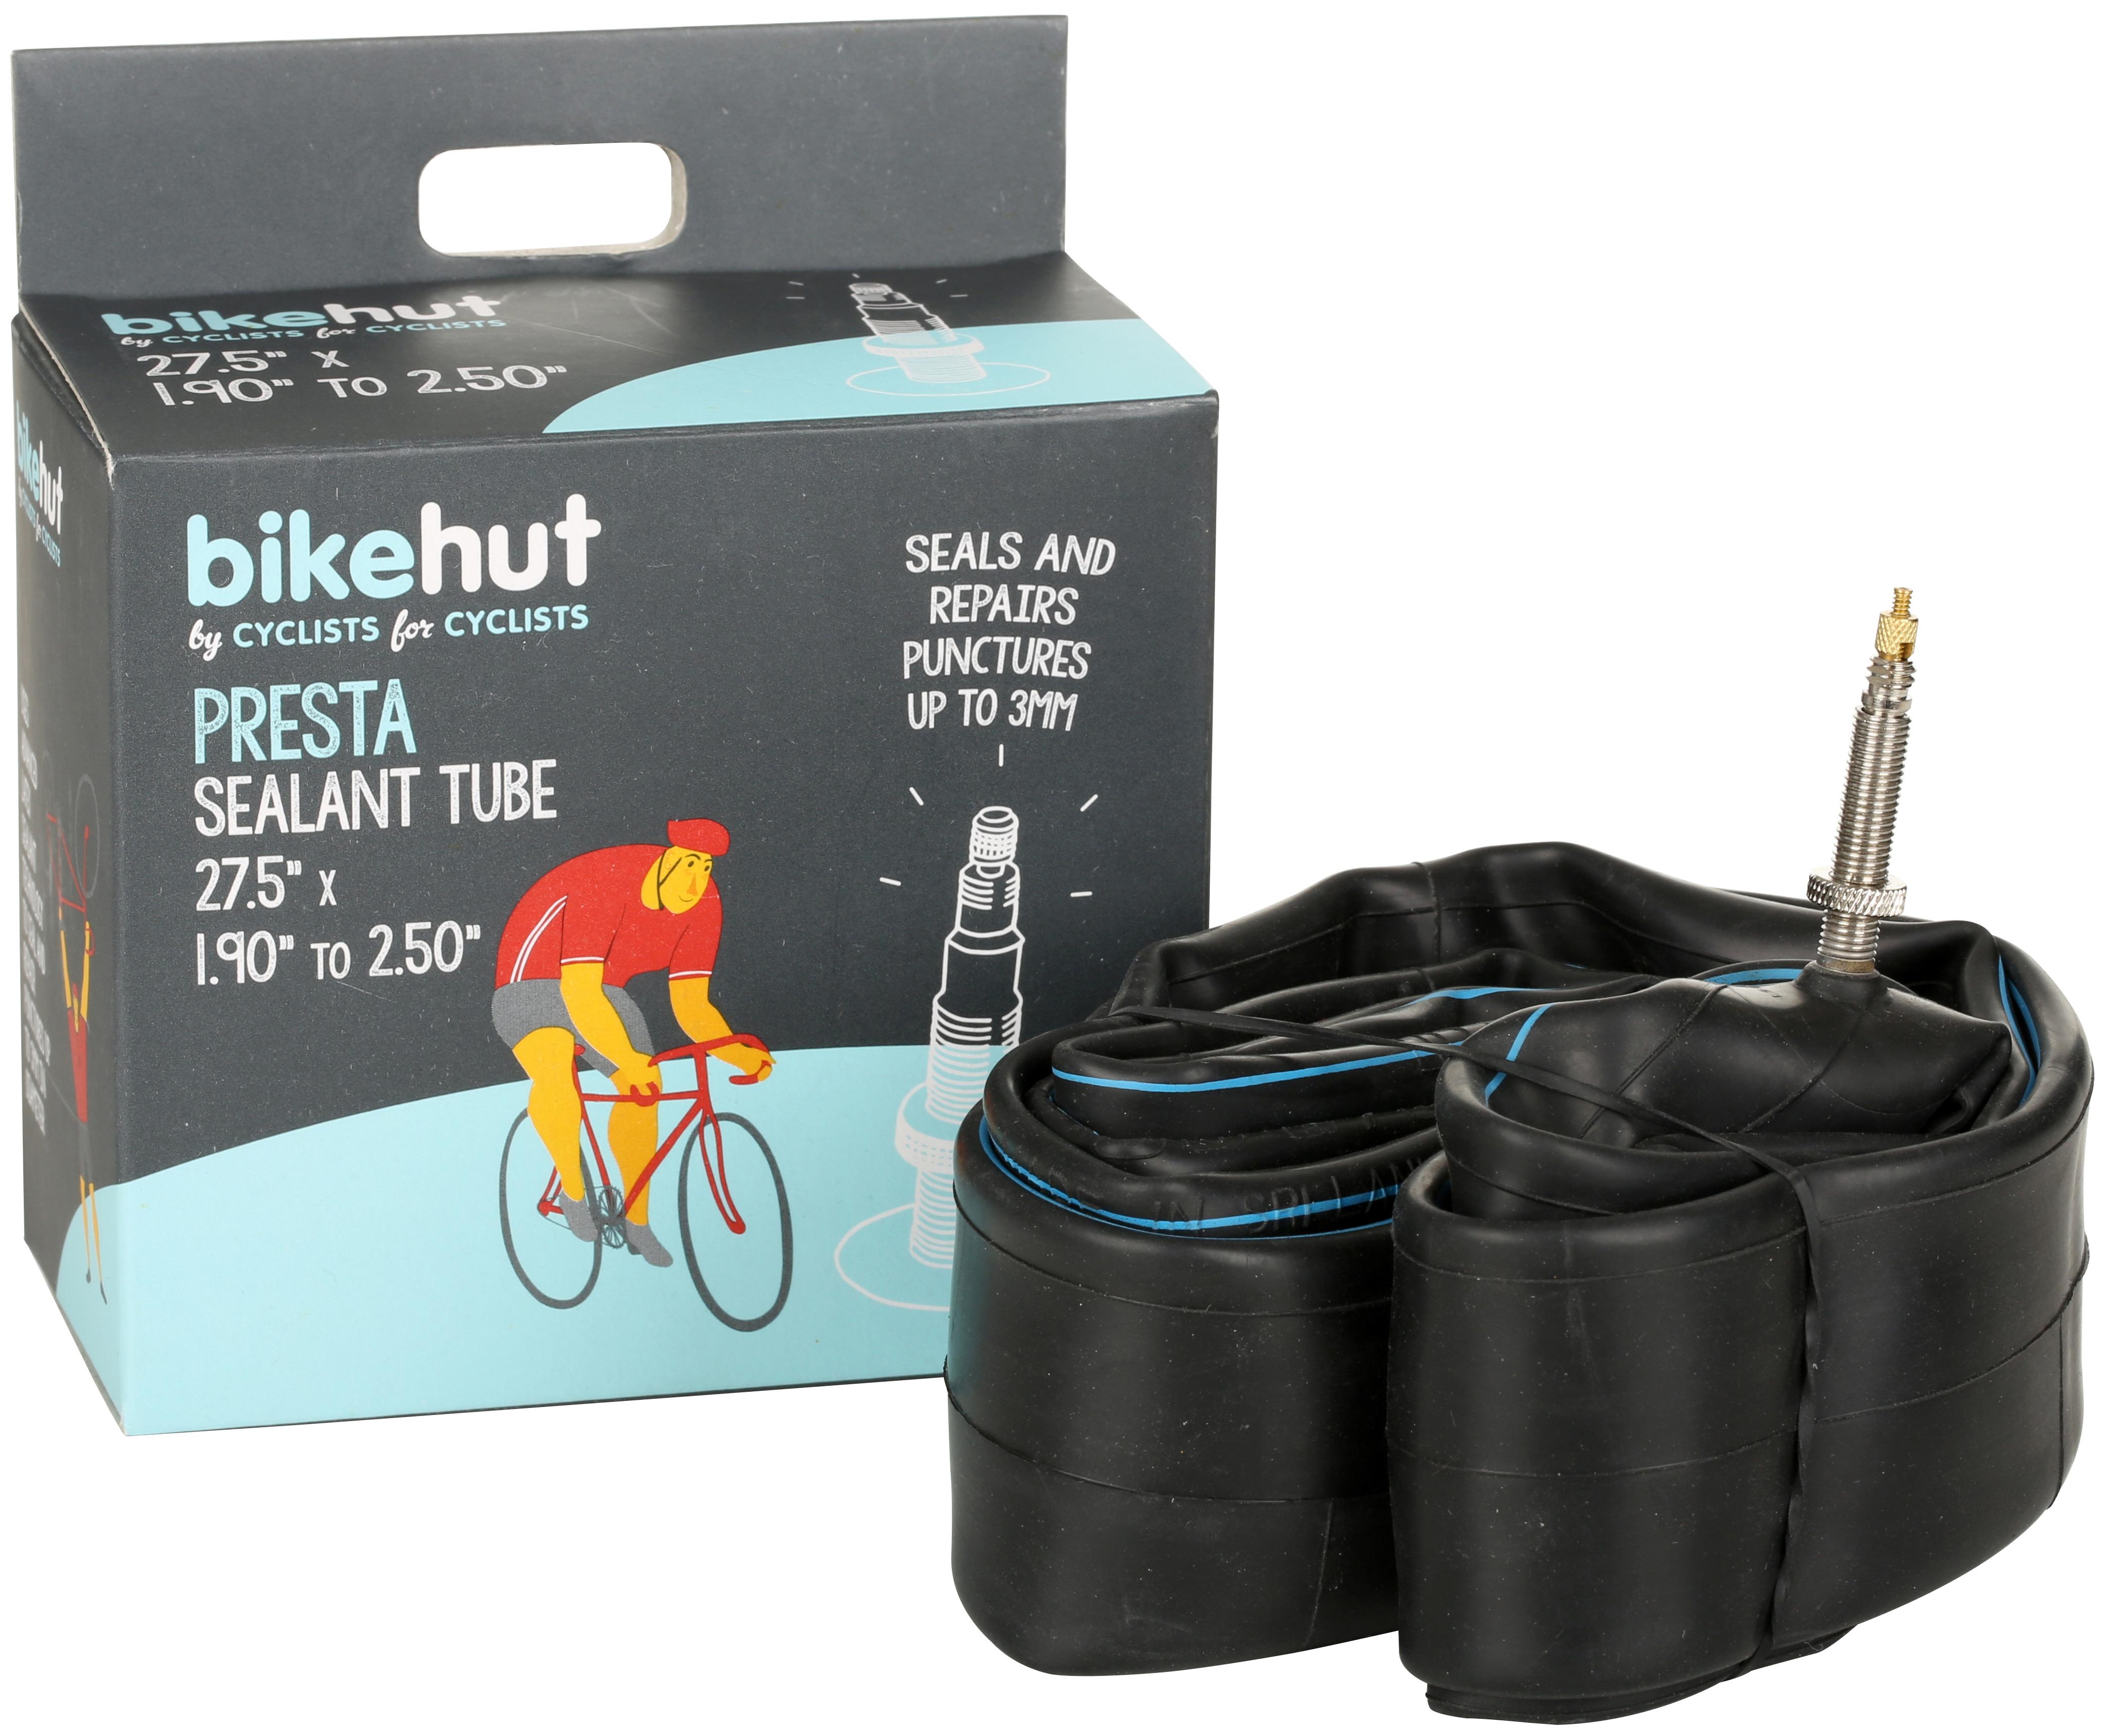 Bikehut Presta Self-Healing Sealant Tube - 27.5 X 1.90-2.50